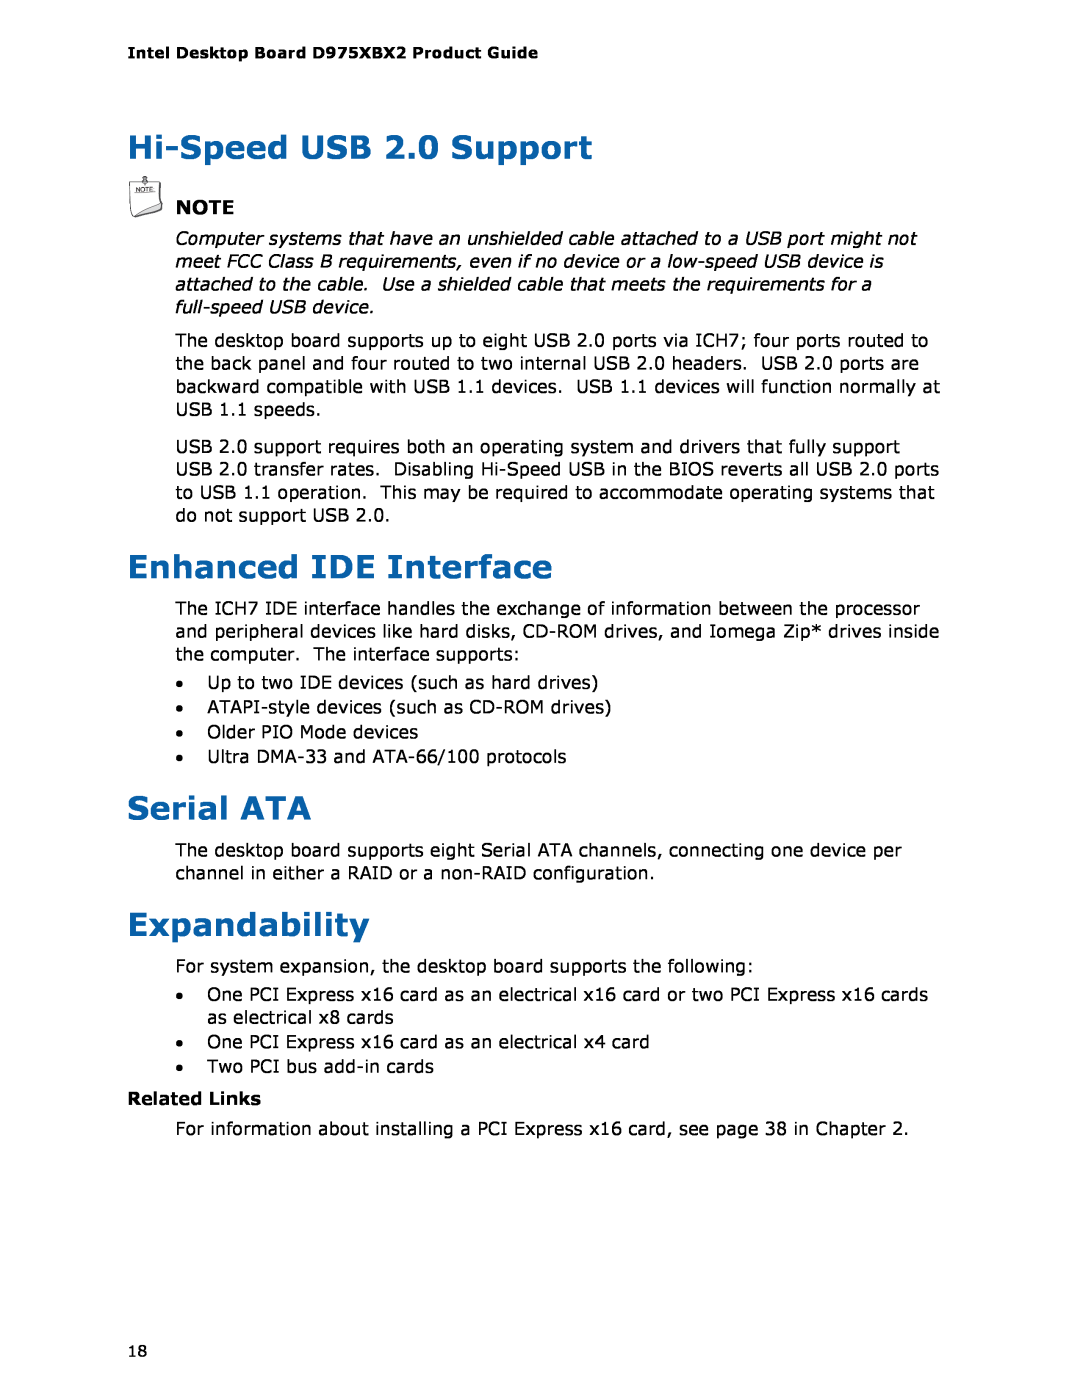 Intel D975XBX2 manual Hi-SpeedUSB 2.0 Support, Enhanced IDE Interface, Serial ATA, Expandability 